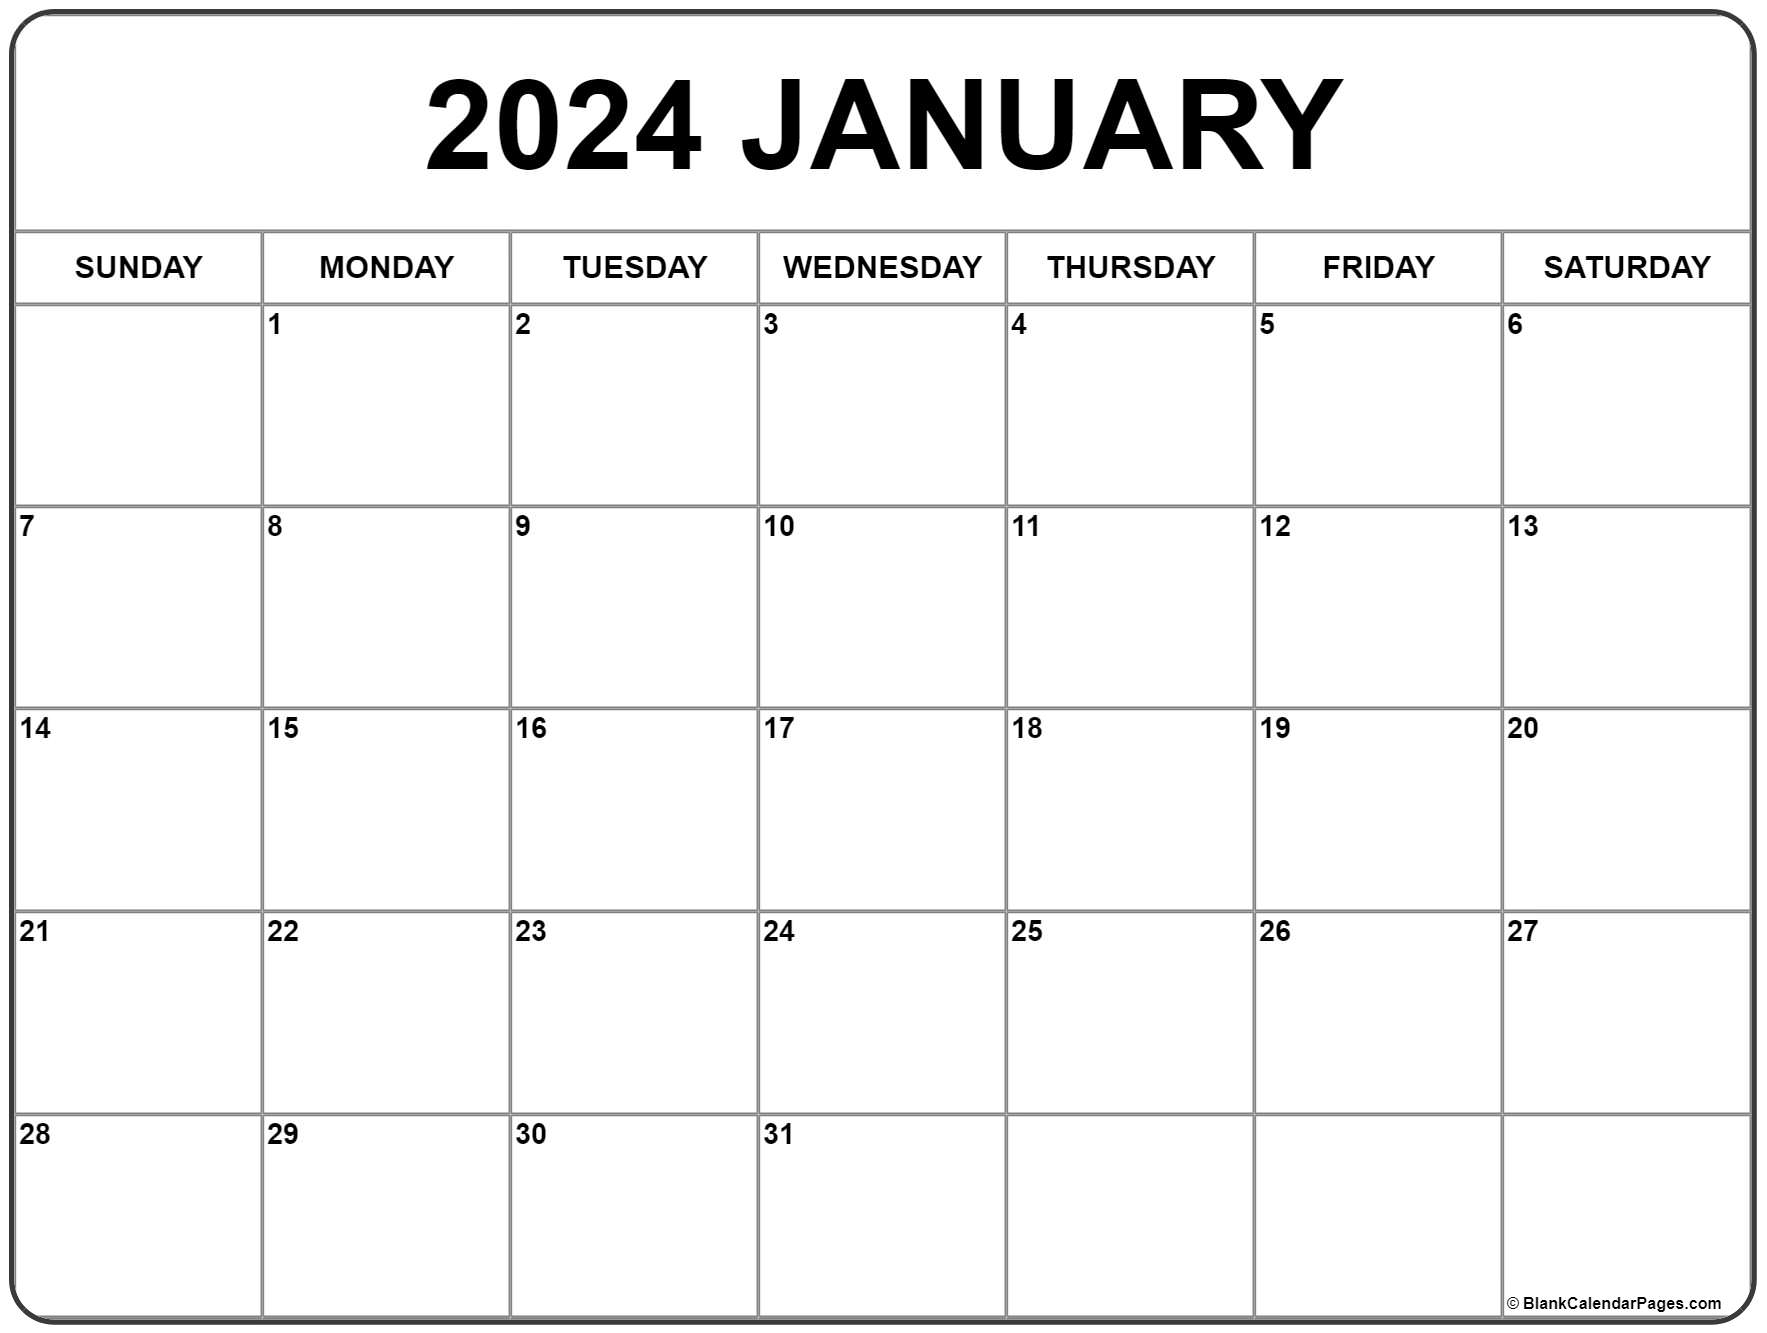 Free January Calendar 2022 January 2022 Calendar | Free Printable Calendar Templates